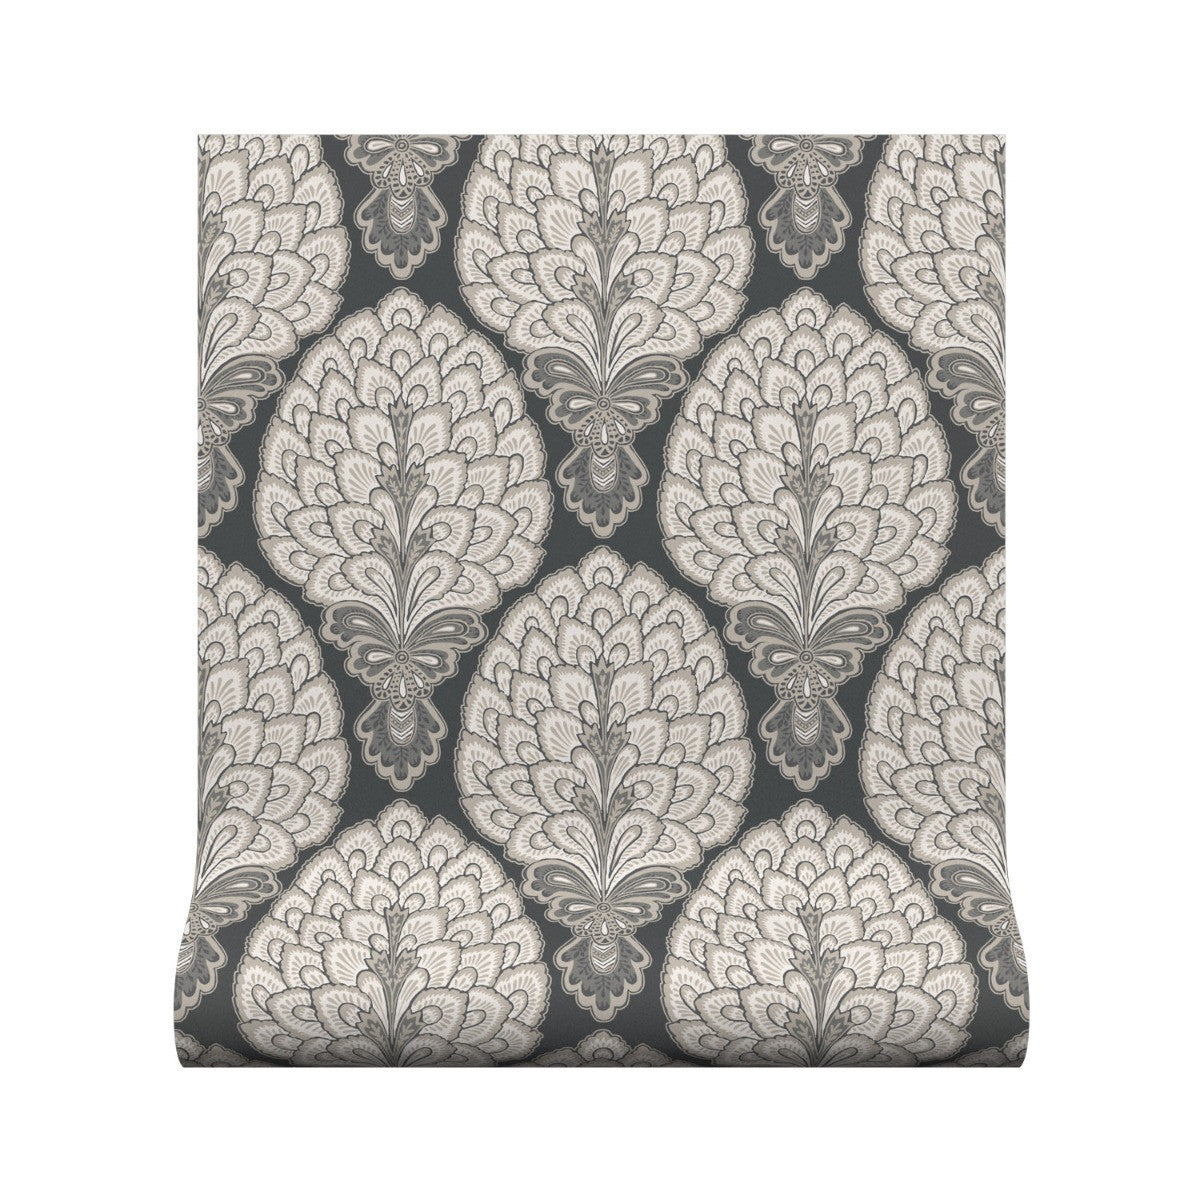 SULTAN Charcoal Wallpaper - Warner House